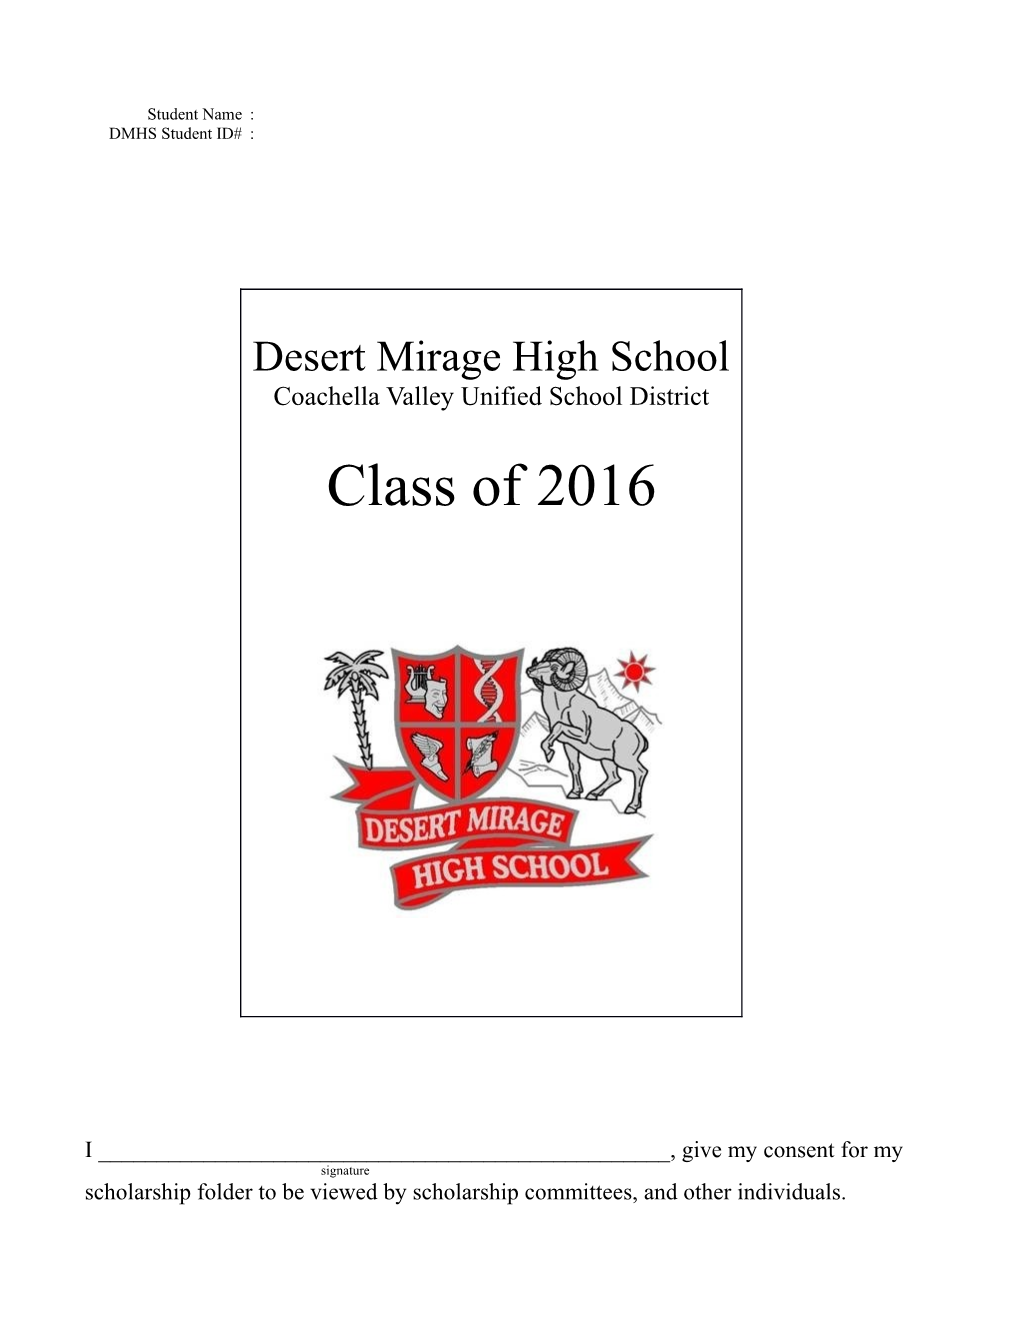 Desert Mirage High School